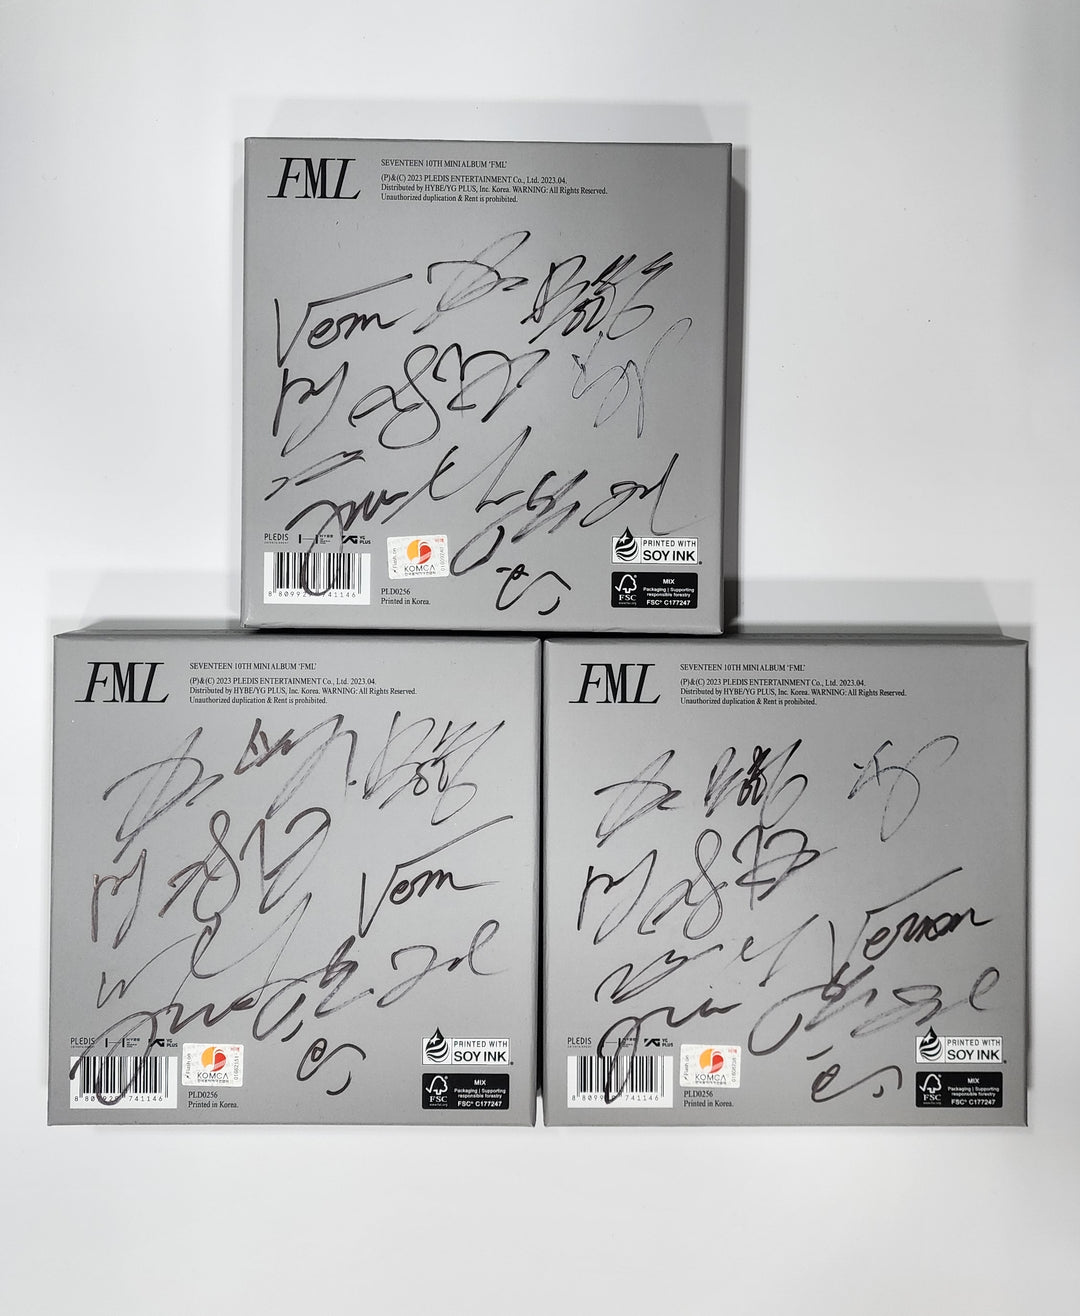 SEVENTEEN「FML」 - 直筆サイン入りプロモアルバム